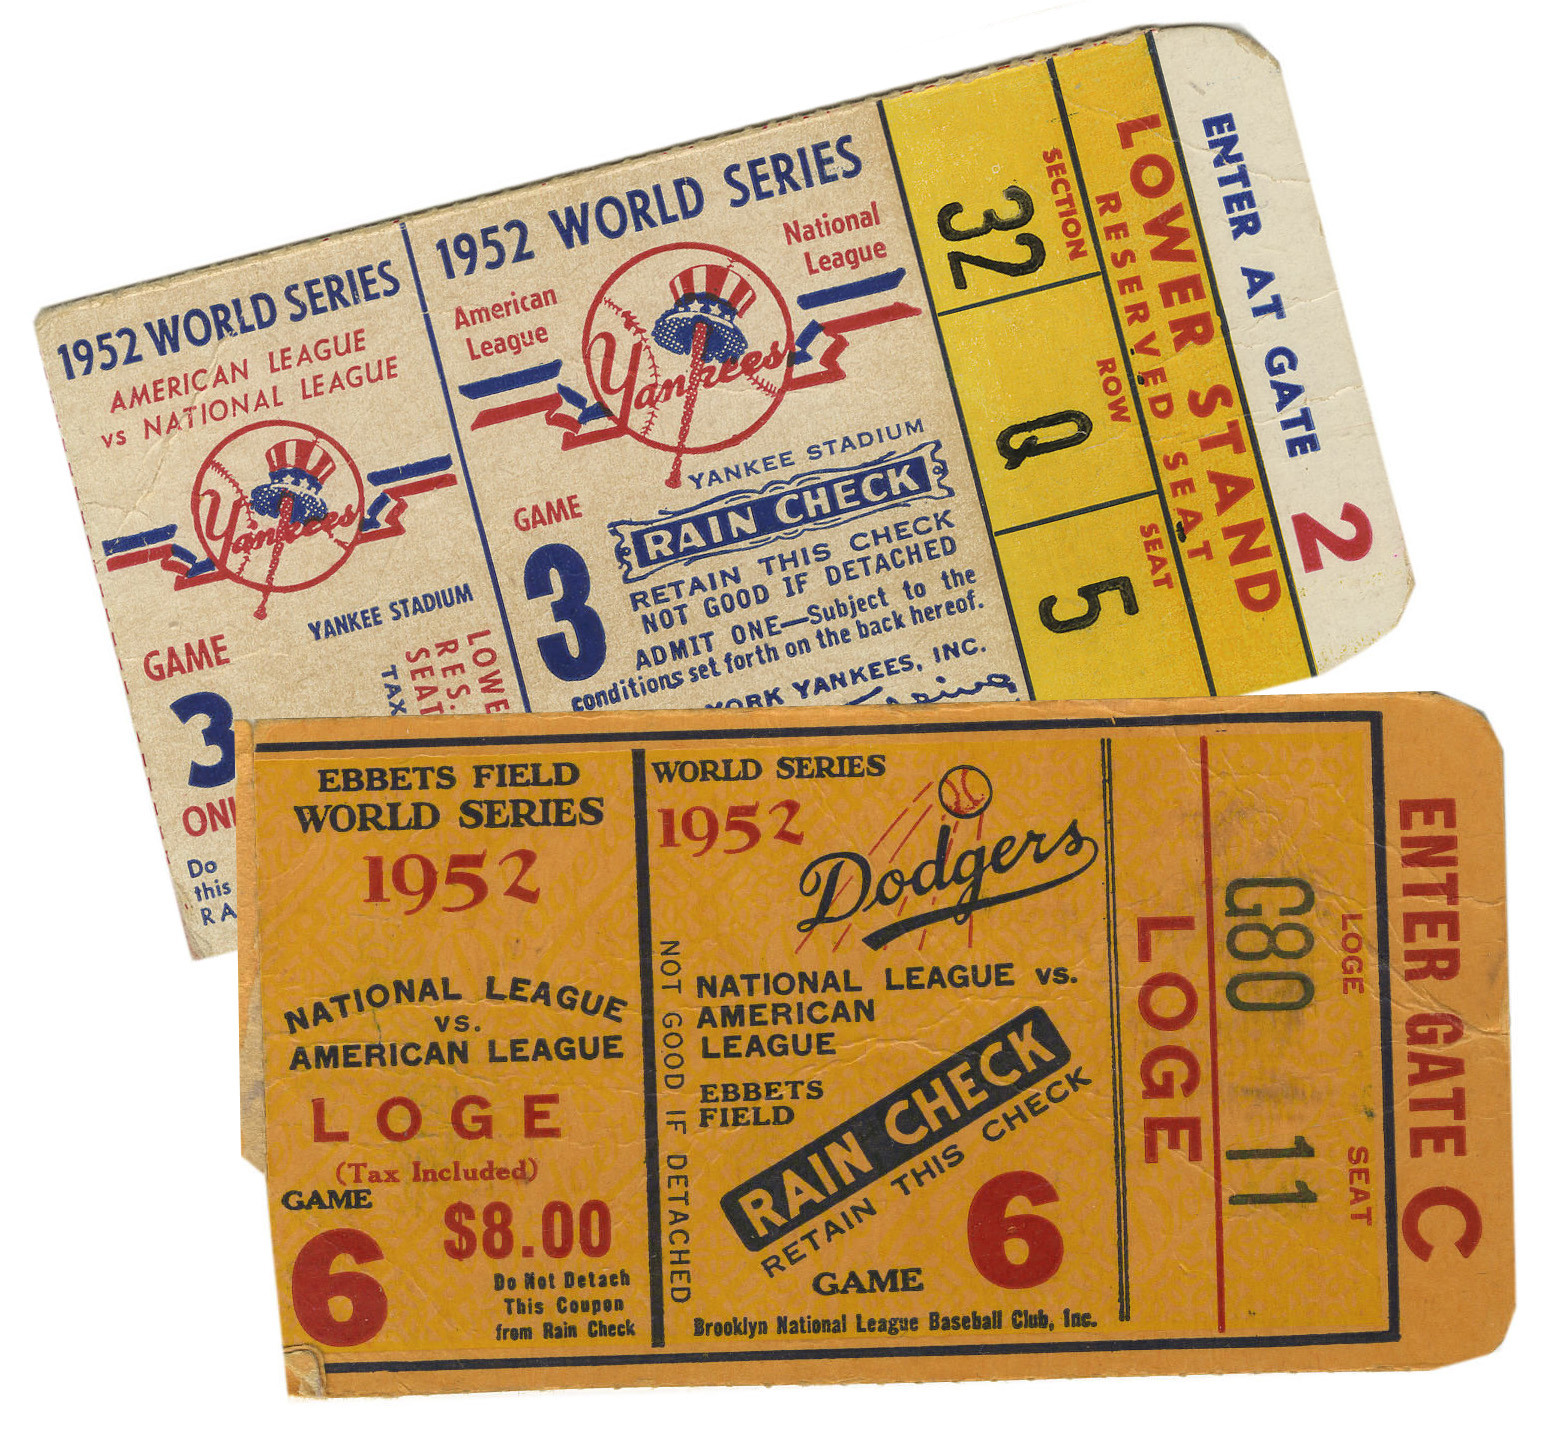 Bob Lemke's Blog 1952 World Series tickets cost teams a nickel